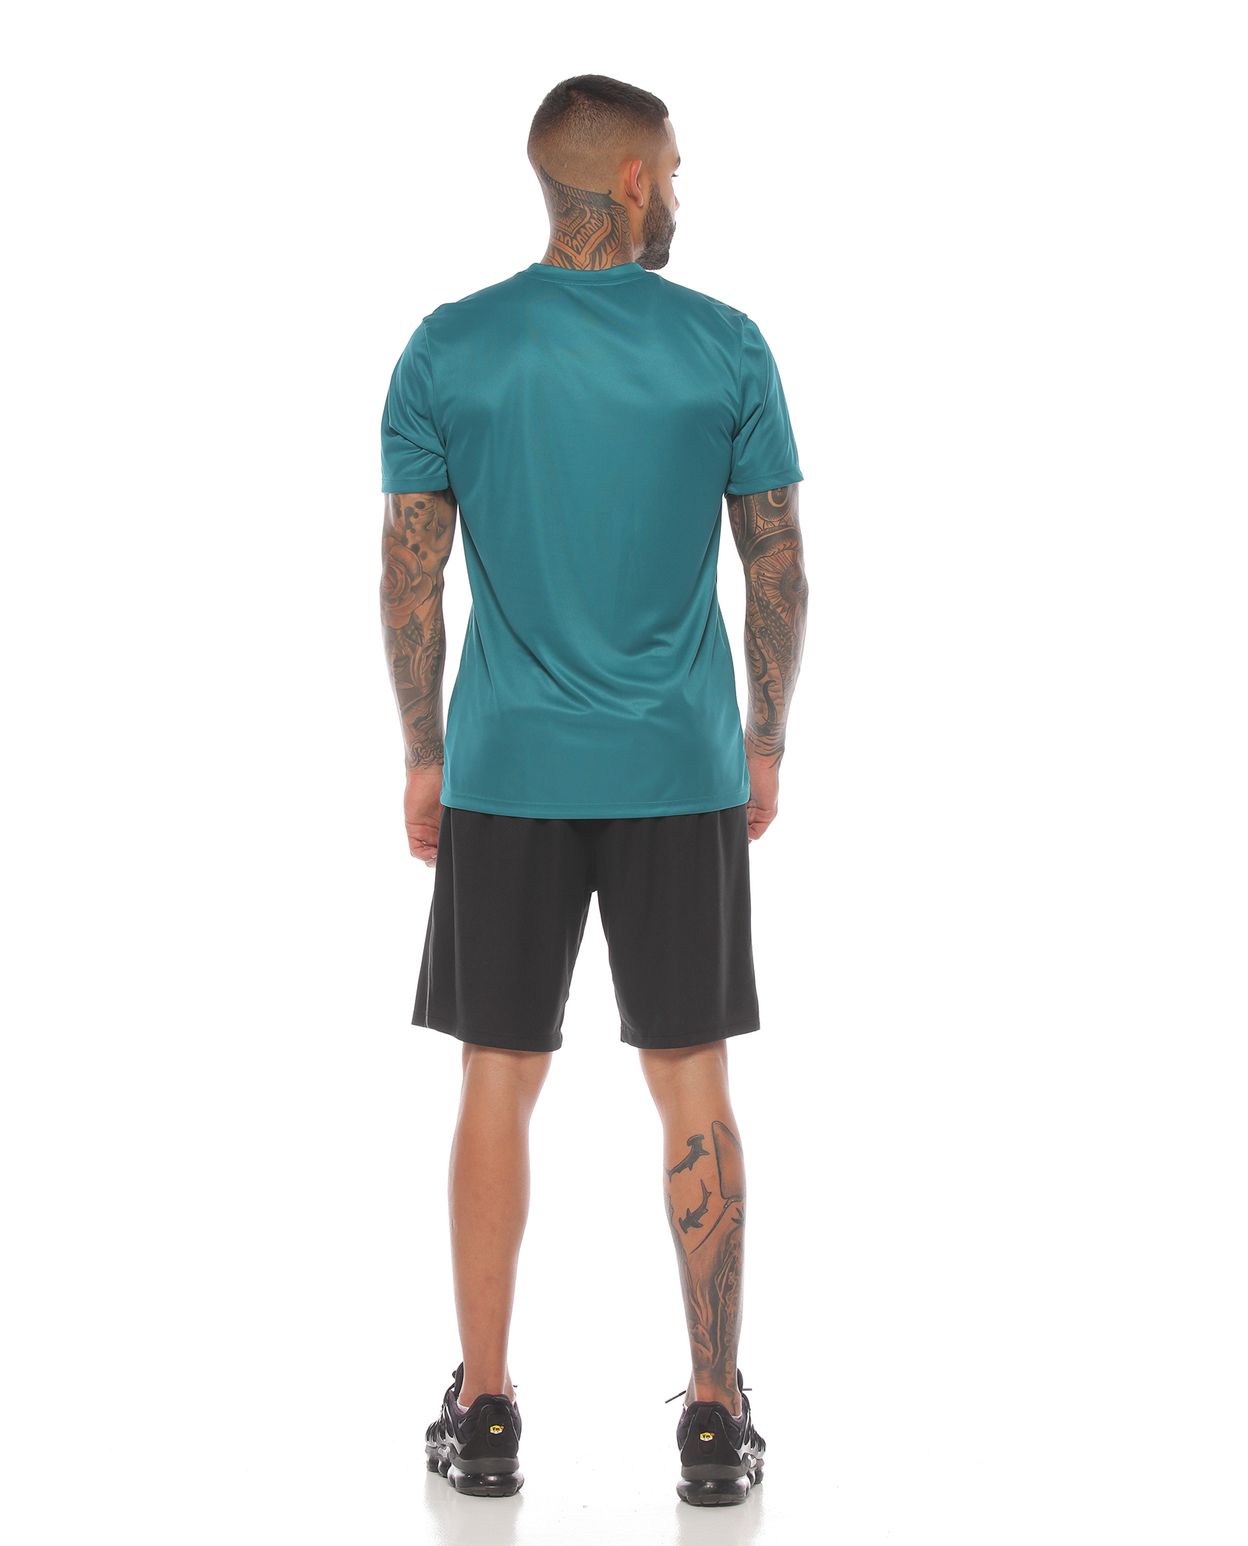 modelo con camiseta deportiva manga corta color verde y pantaloneta deportiva negra para hombre parte trasera